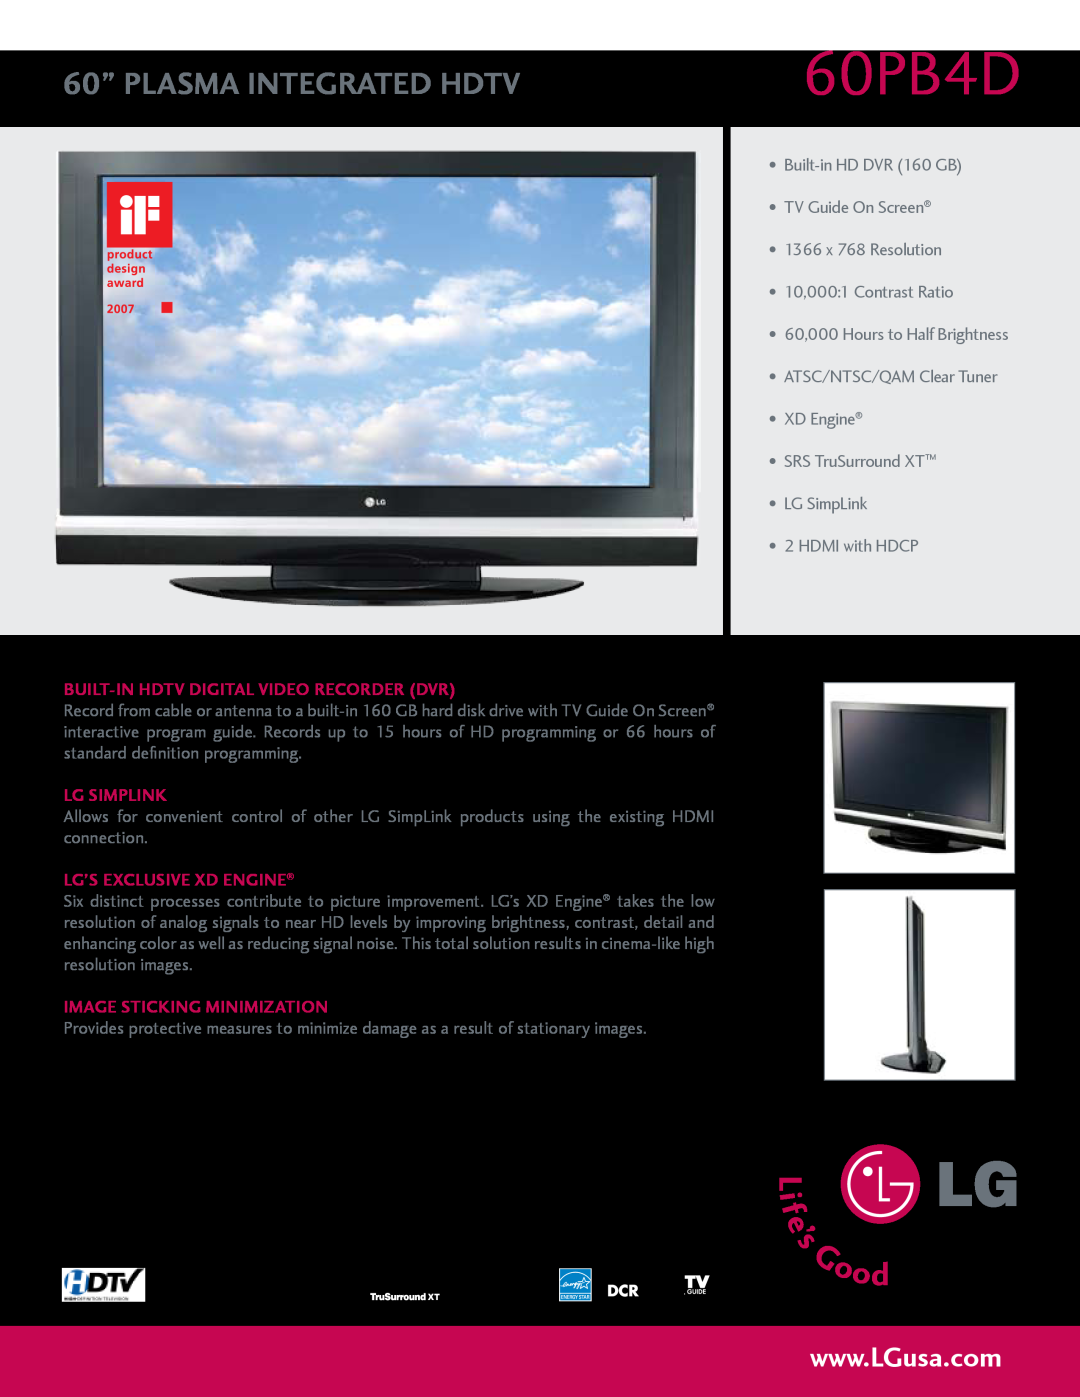 LG Electronics 60PB4D manual 60” PLASMA INTEGRATED HDTV, BUilt-in HDTV DIgital video recorder dvr, Lg Simplink 